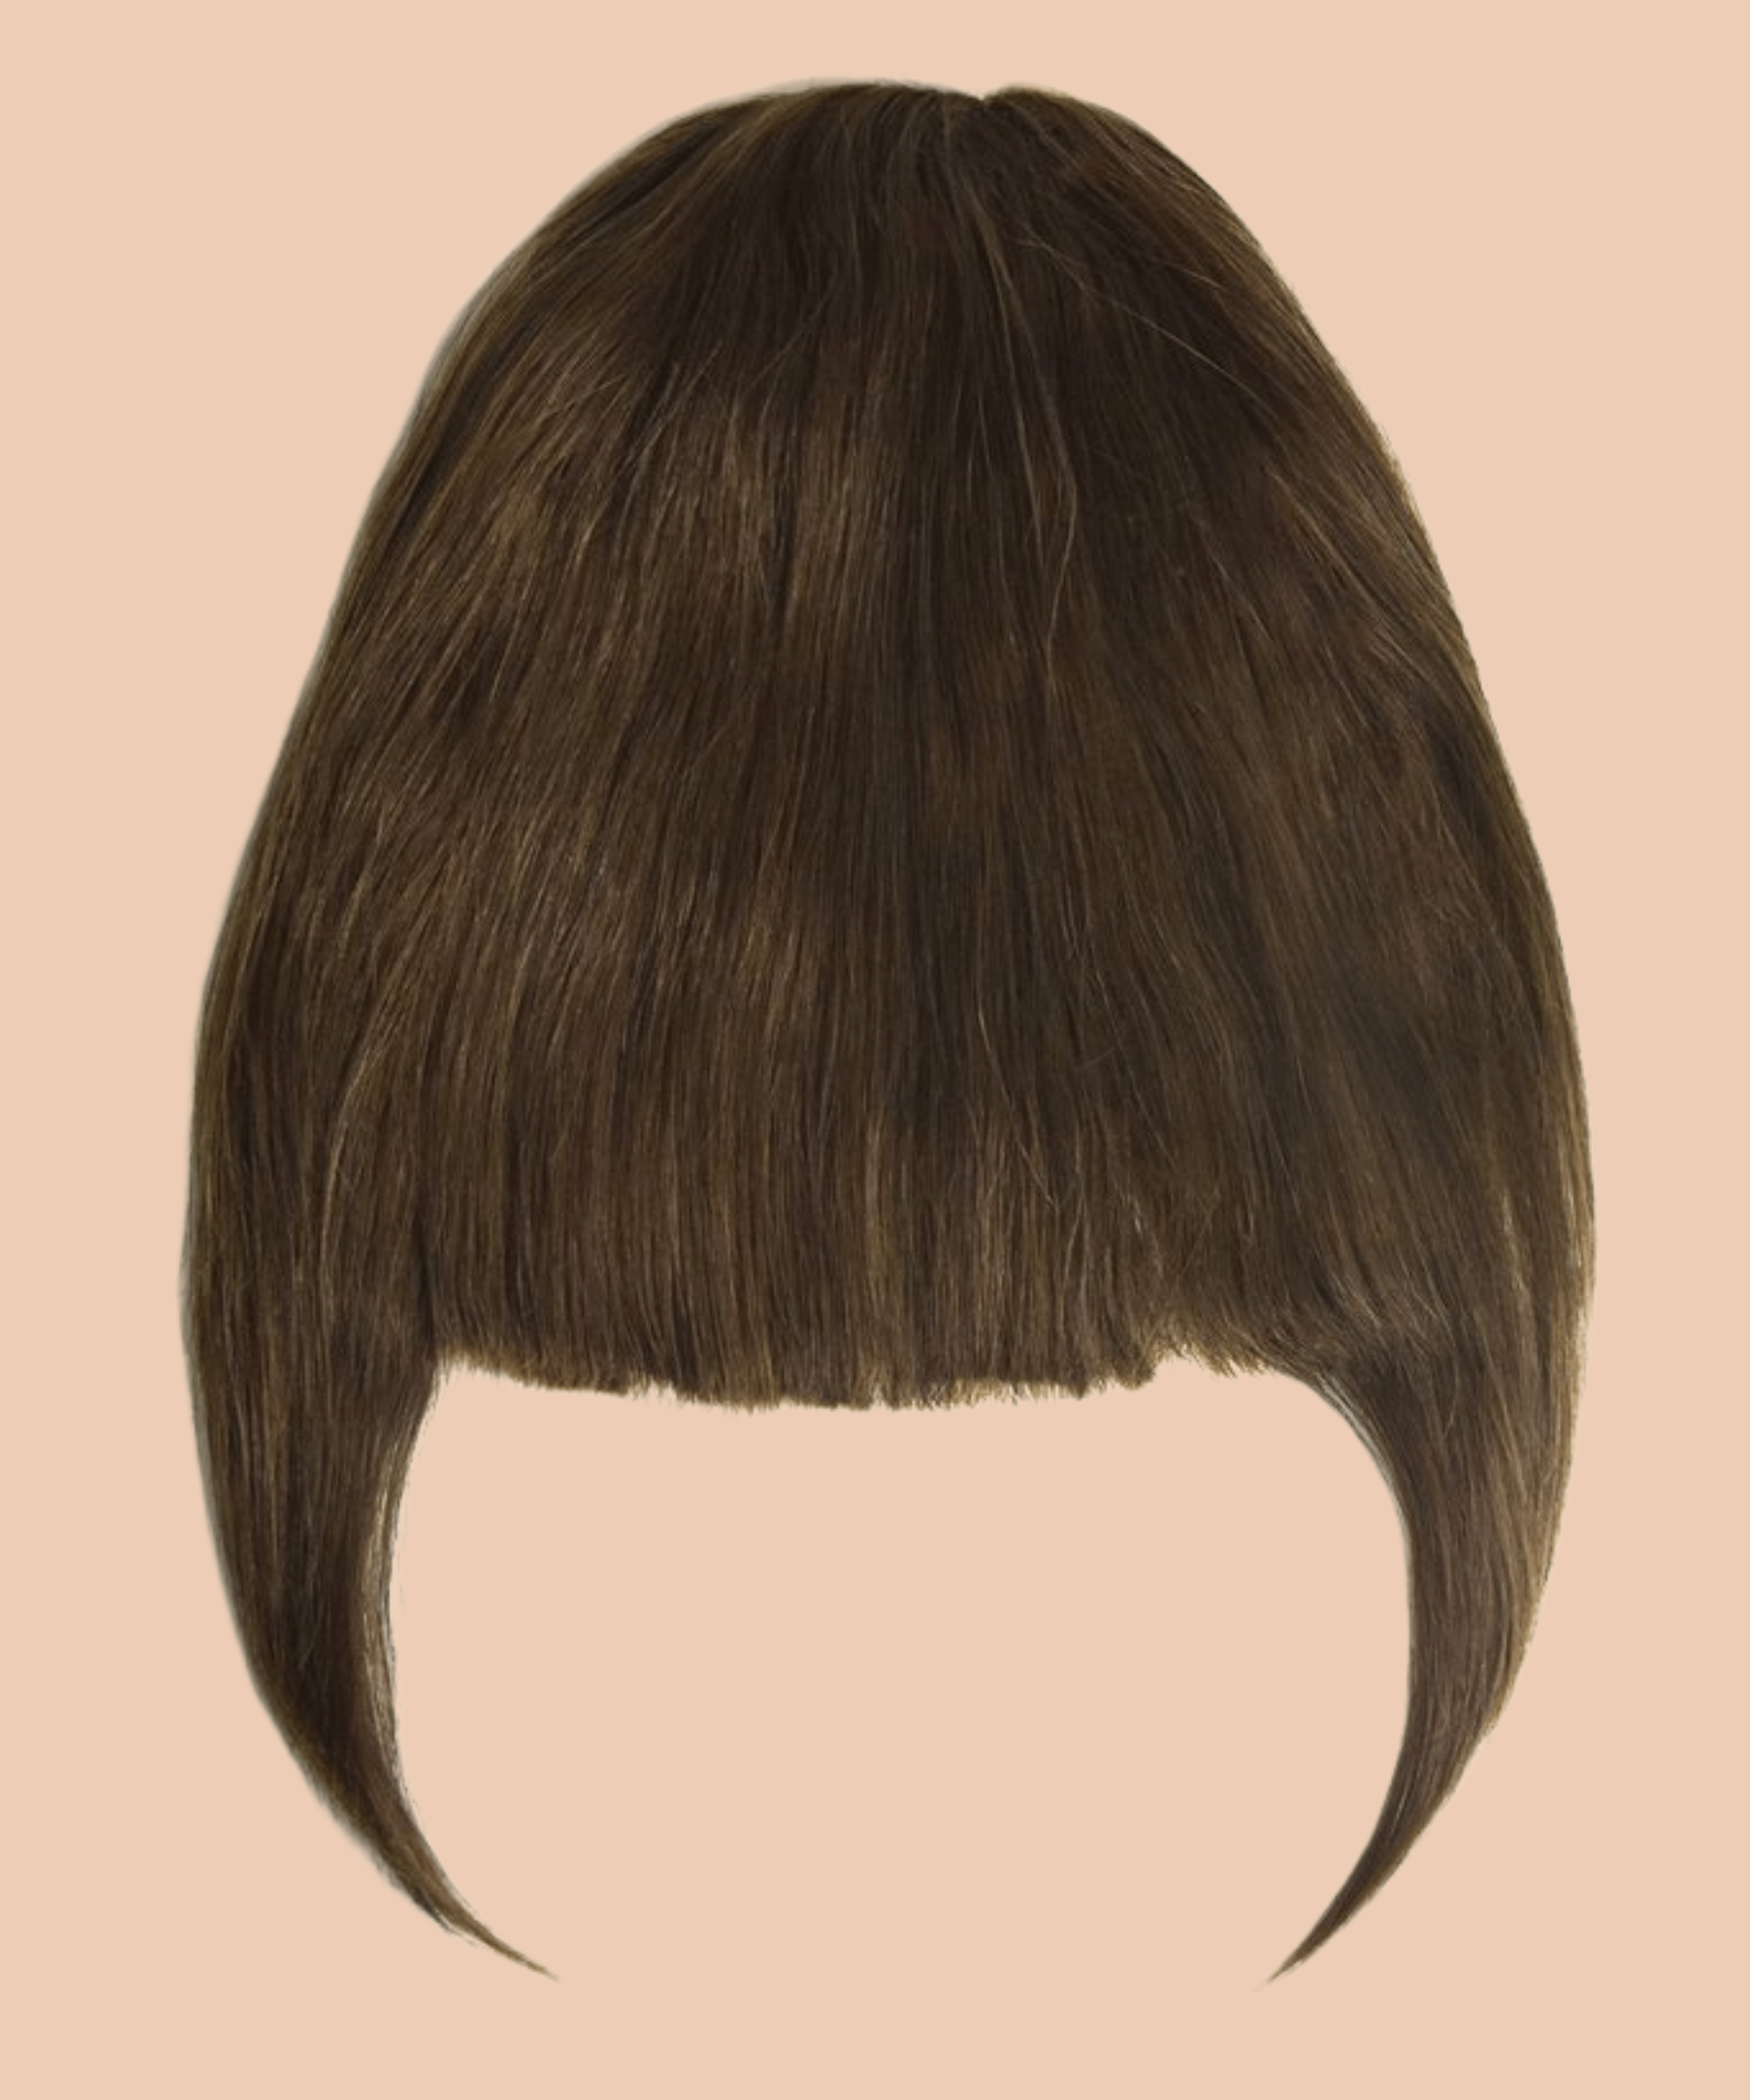 Clip on Human Hair Fringe / Bangs in Chestnut Brown image cap